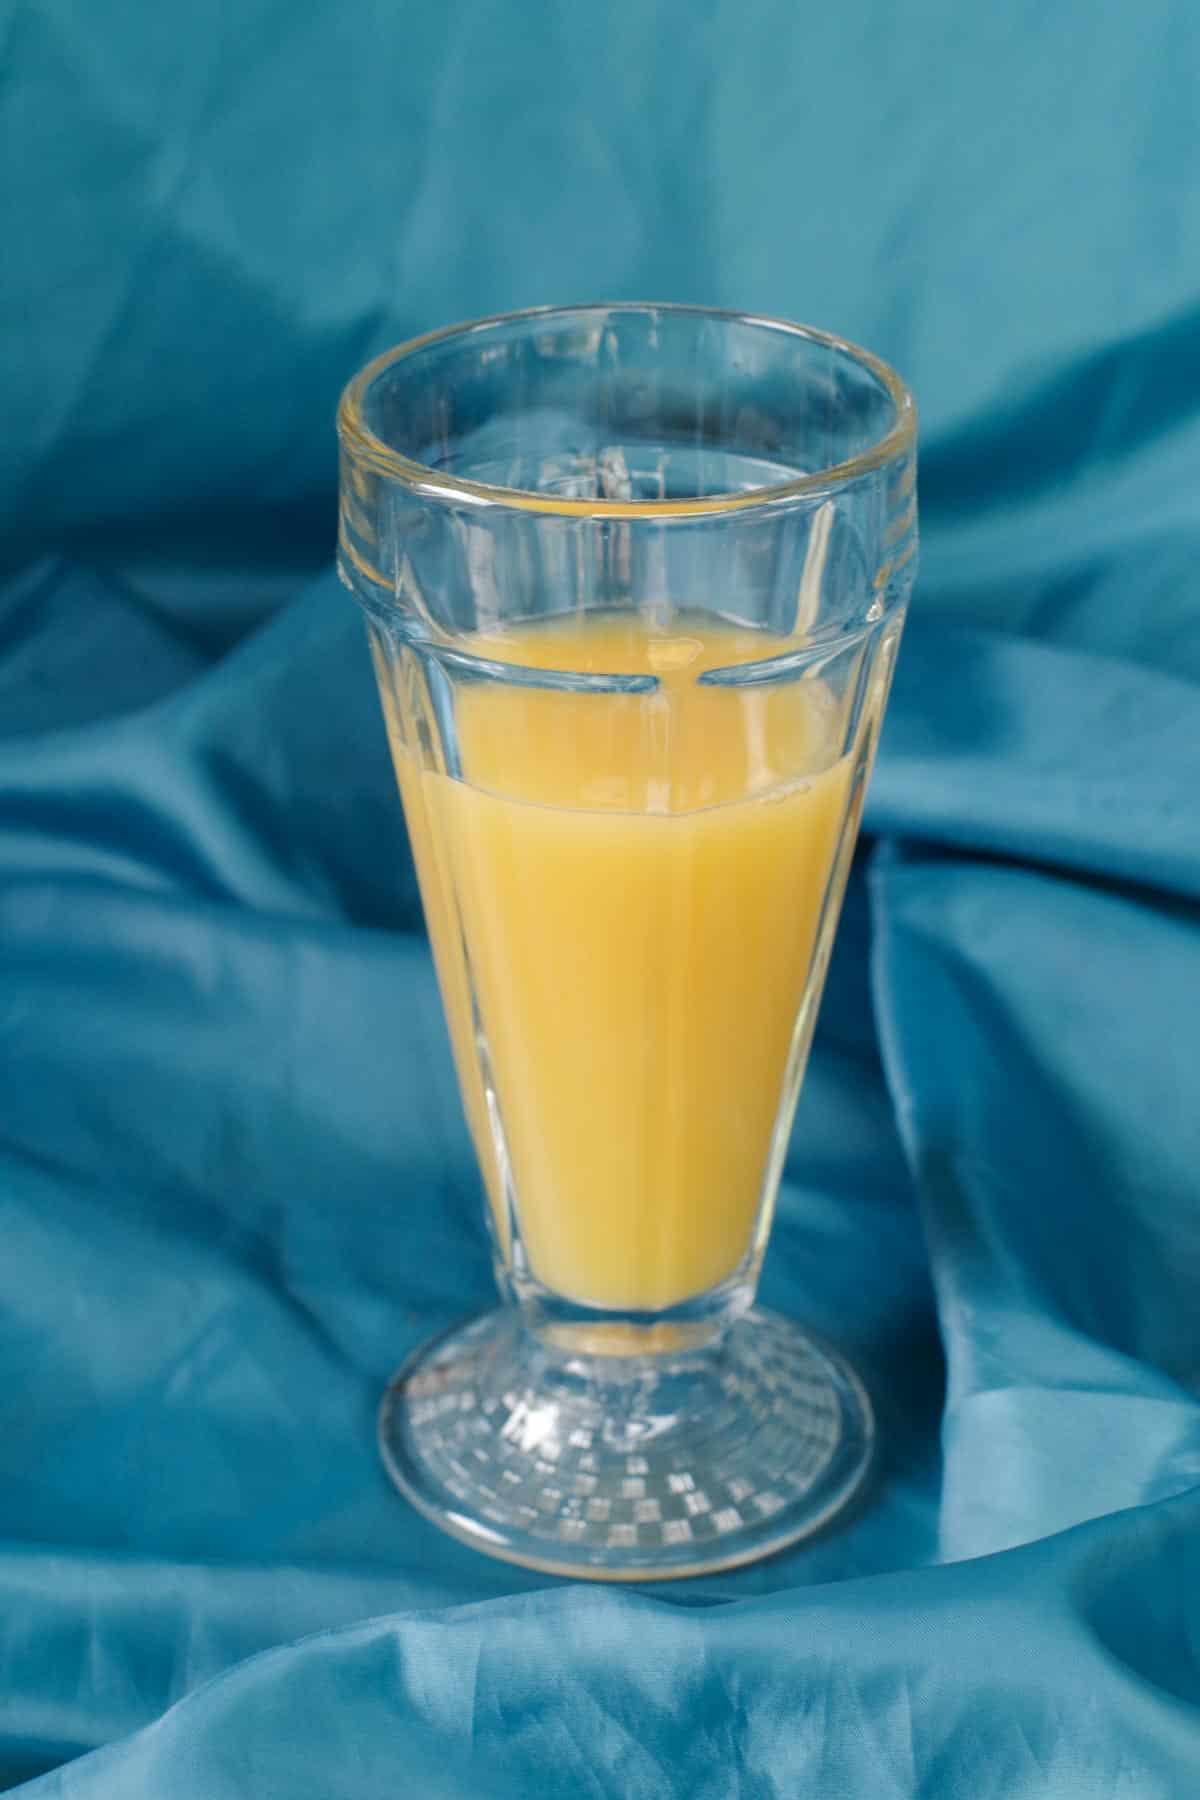 1 part orange juice added to glass